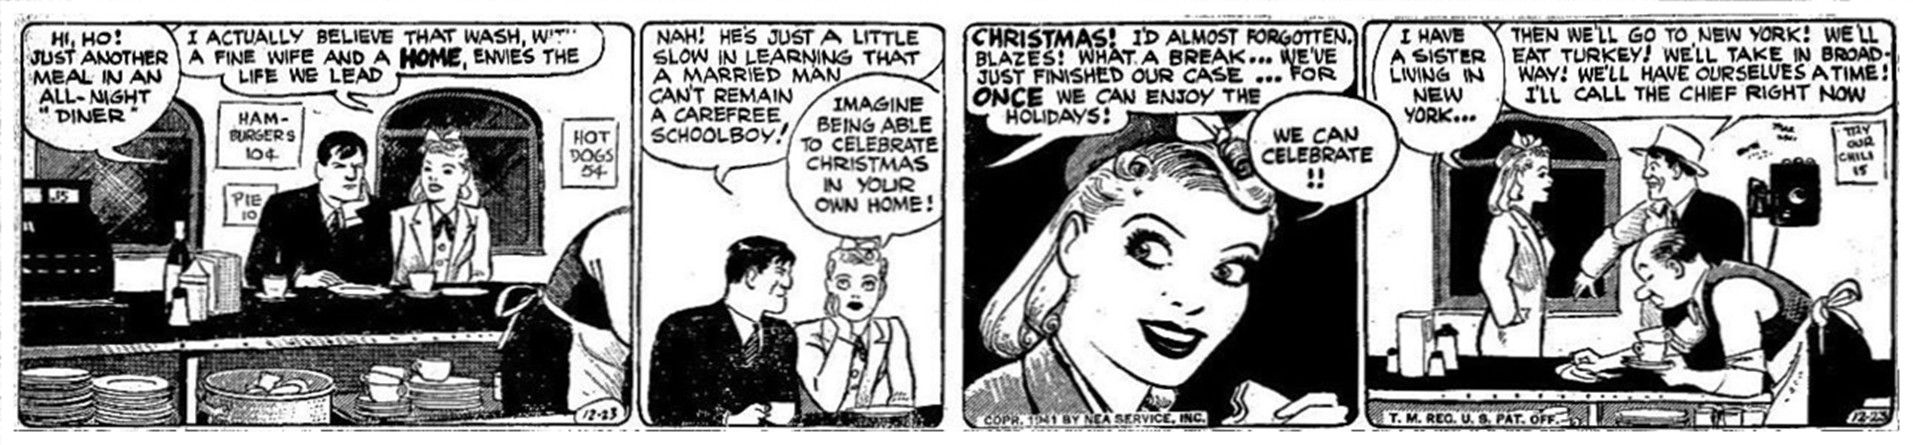 captain-easy-christmas-1941-1